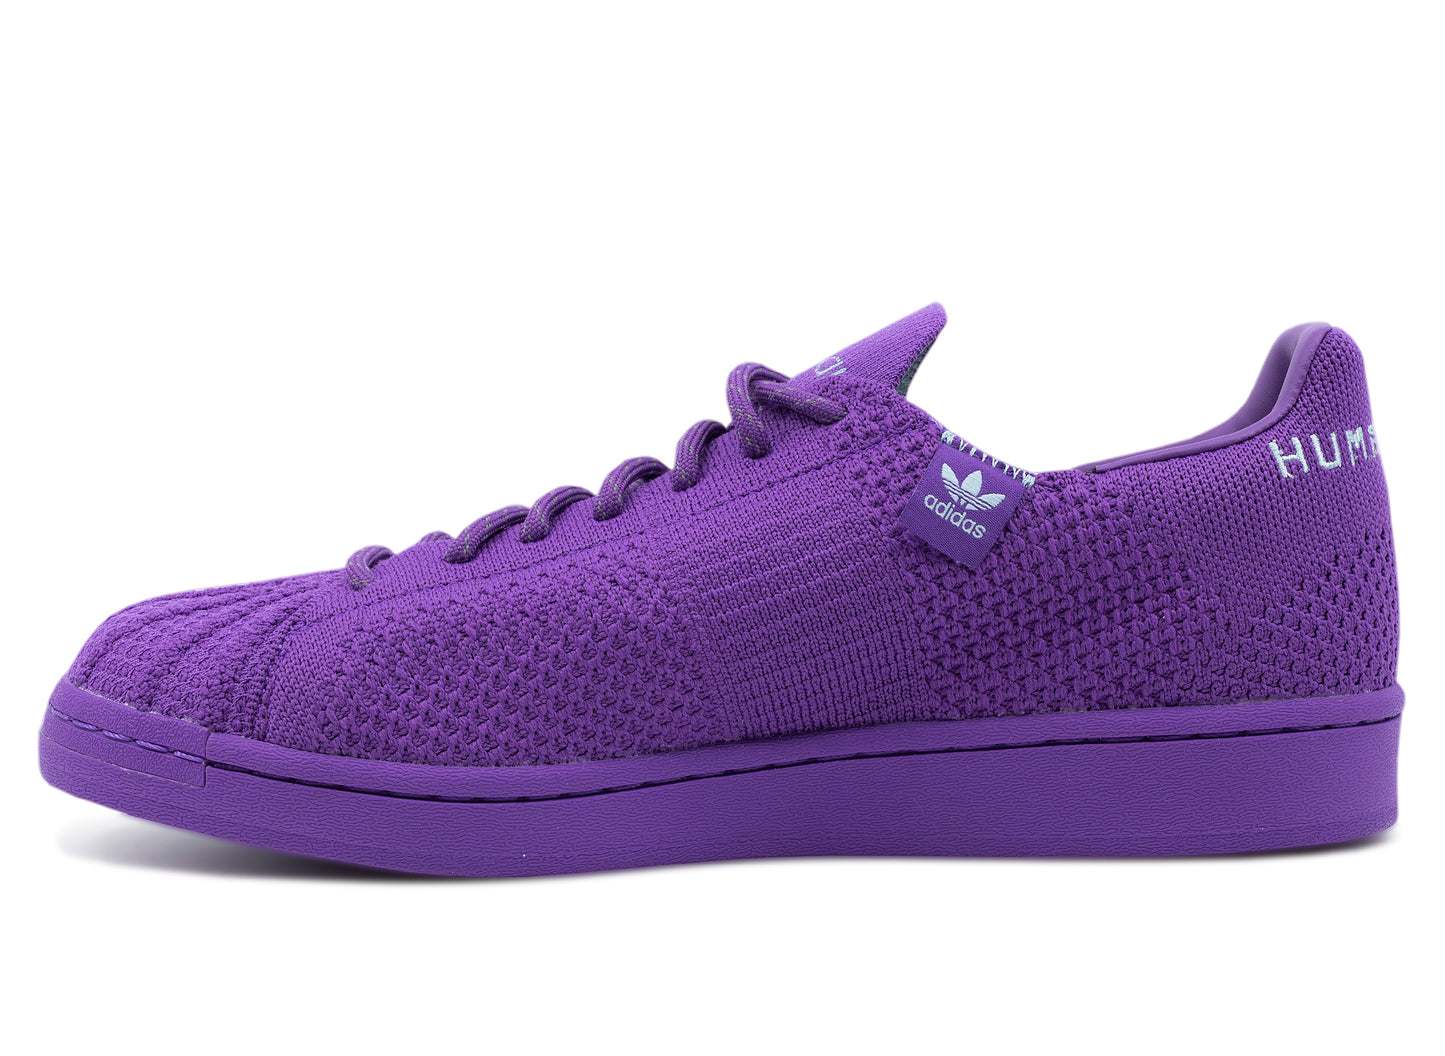 Adidas x Pharrell Williams Superstar PK 'Active Purple'